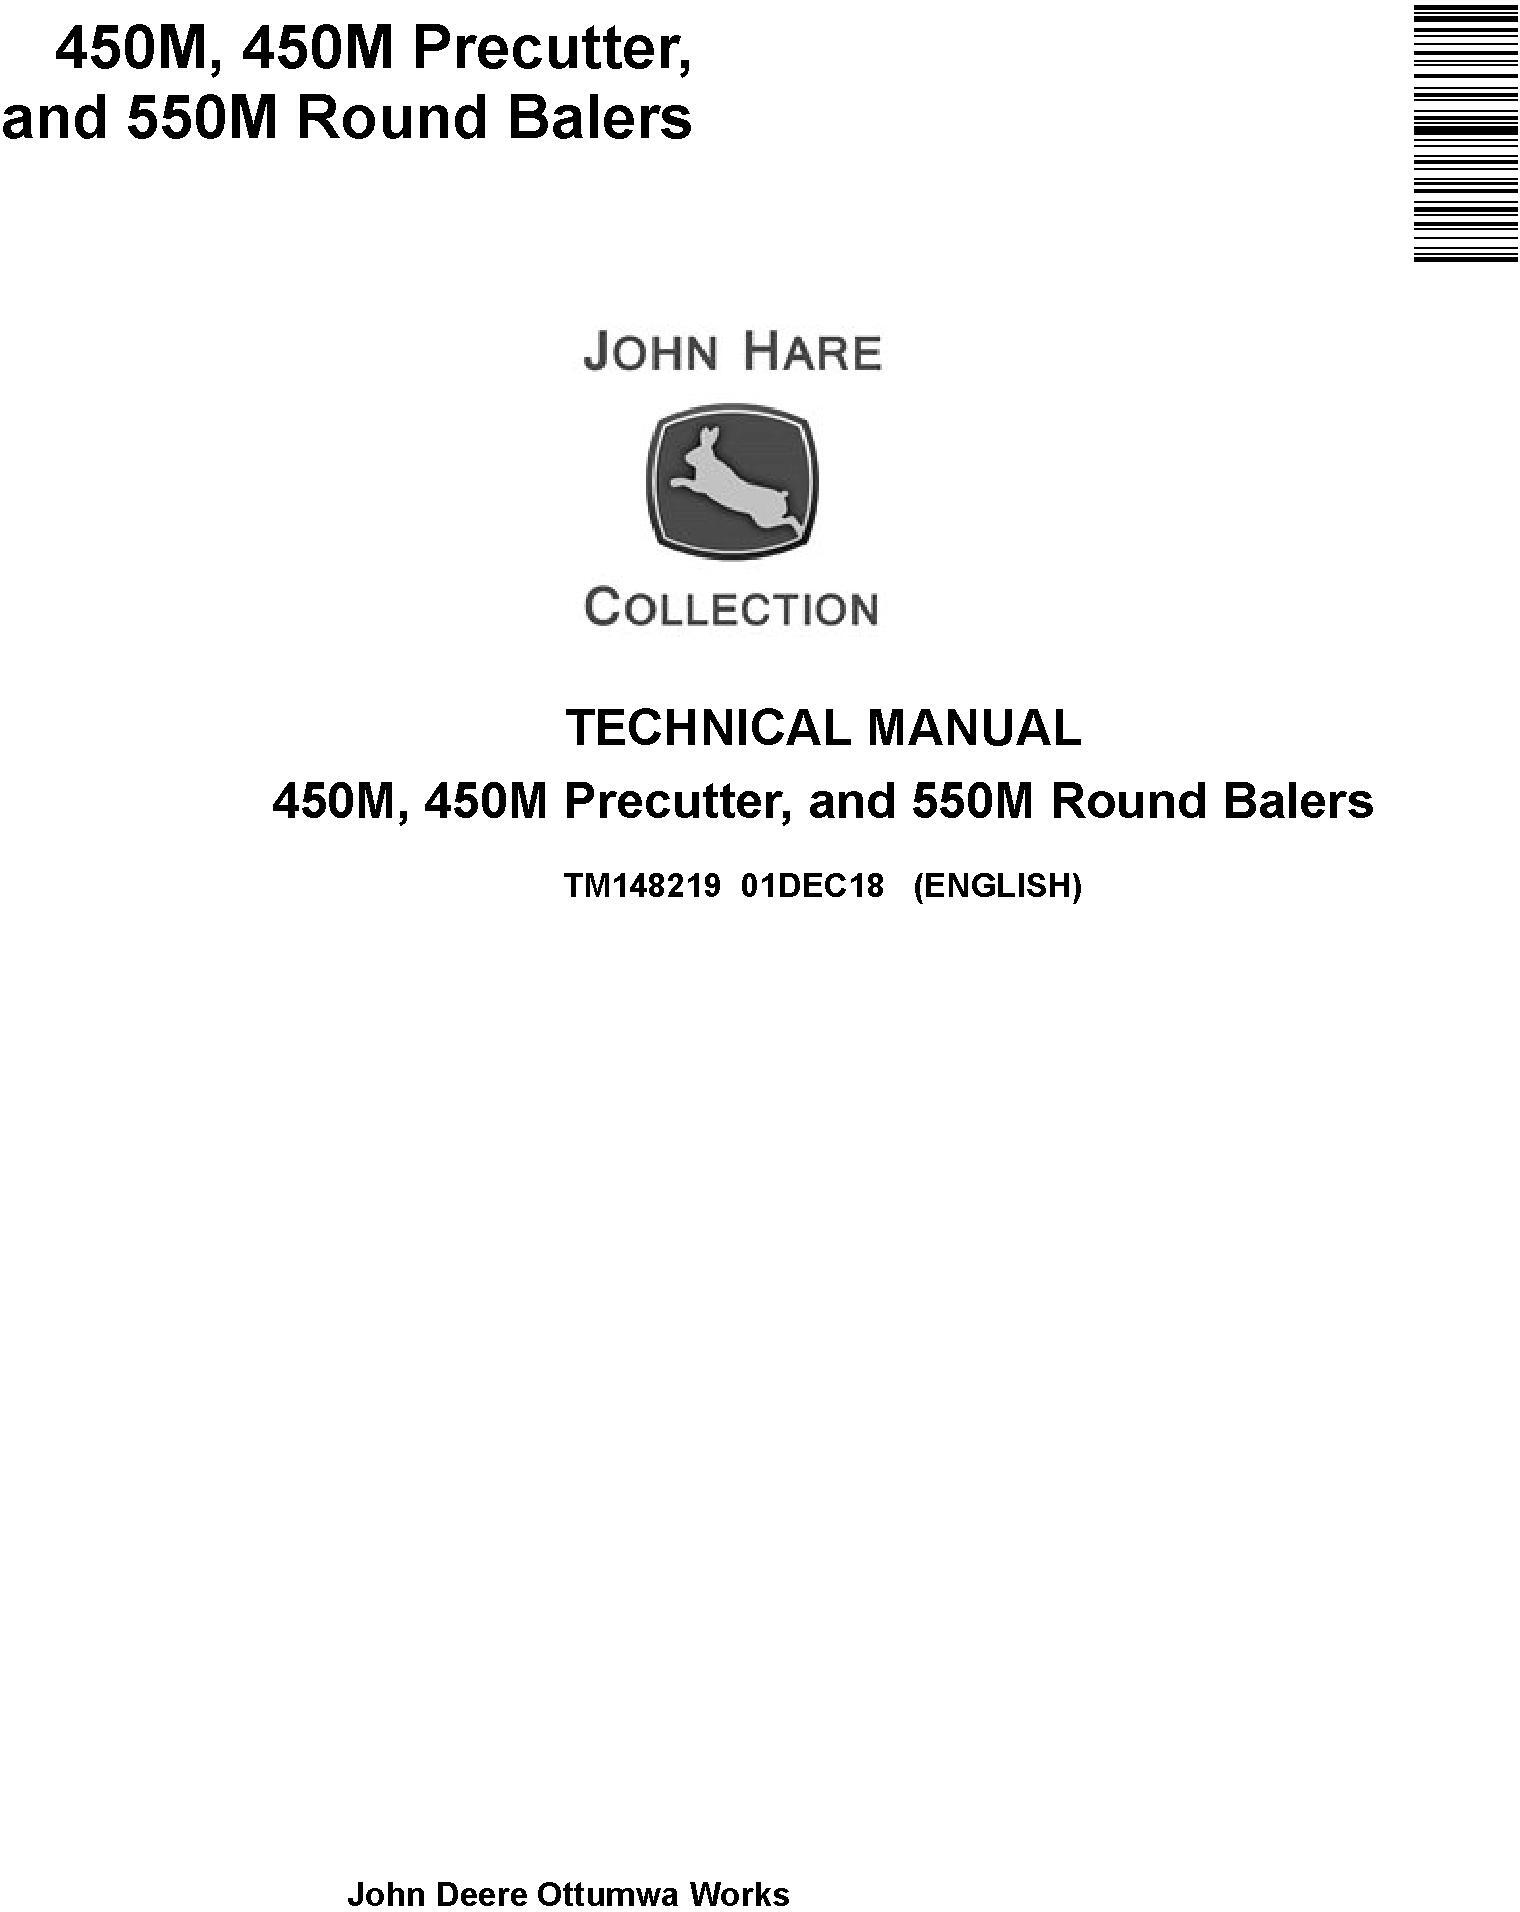 John Deere 450M 550M Precutter Round Balers Technical Manual TM148219